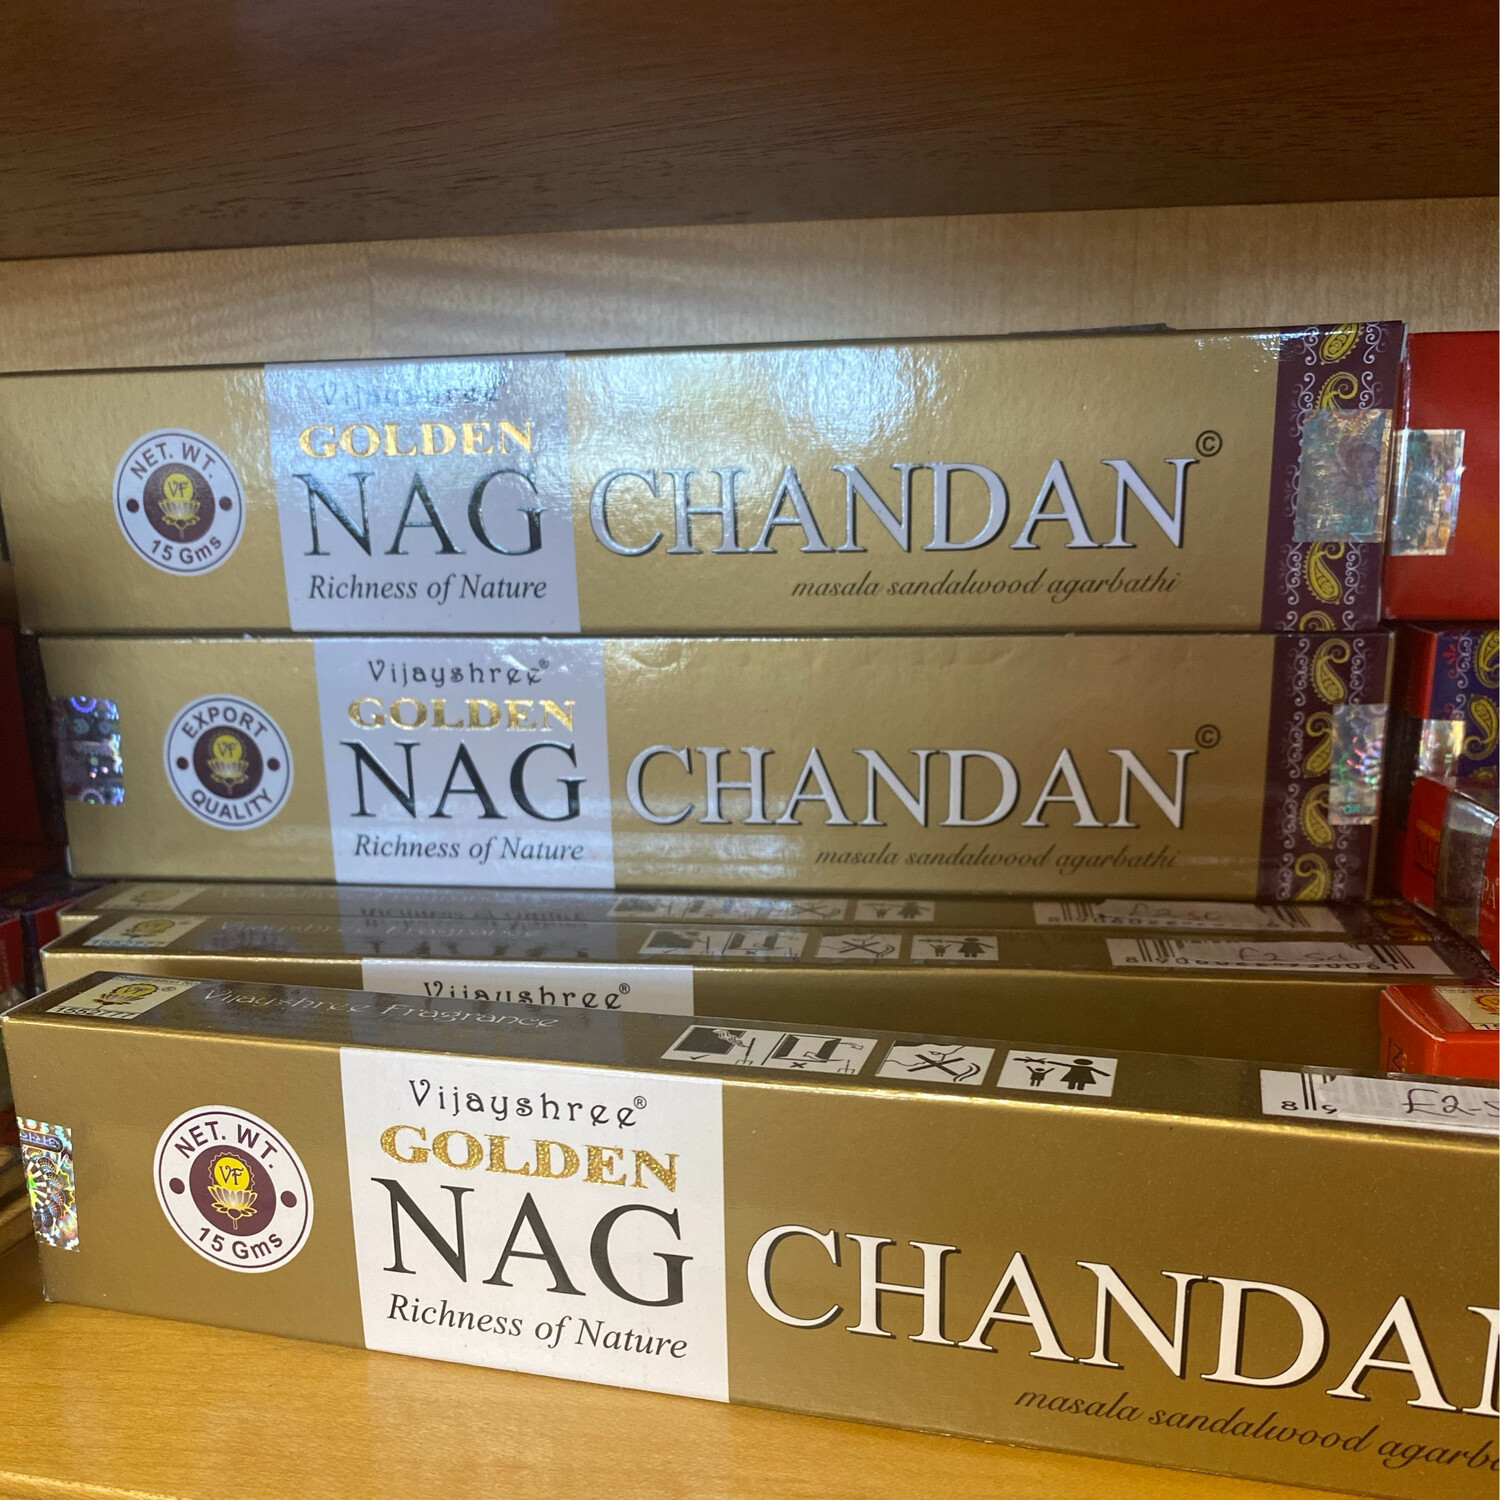 Nag Chandan